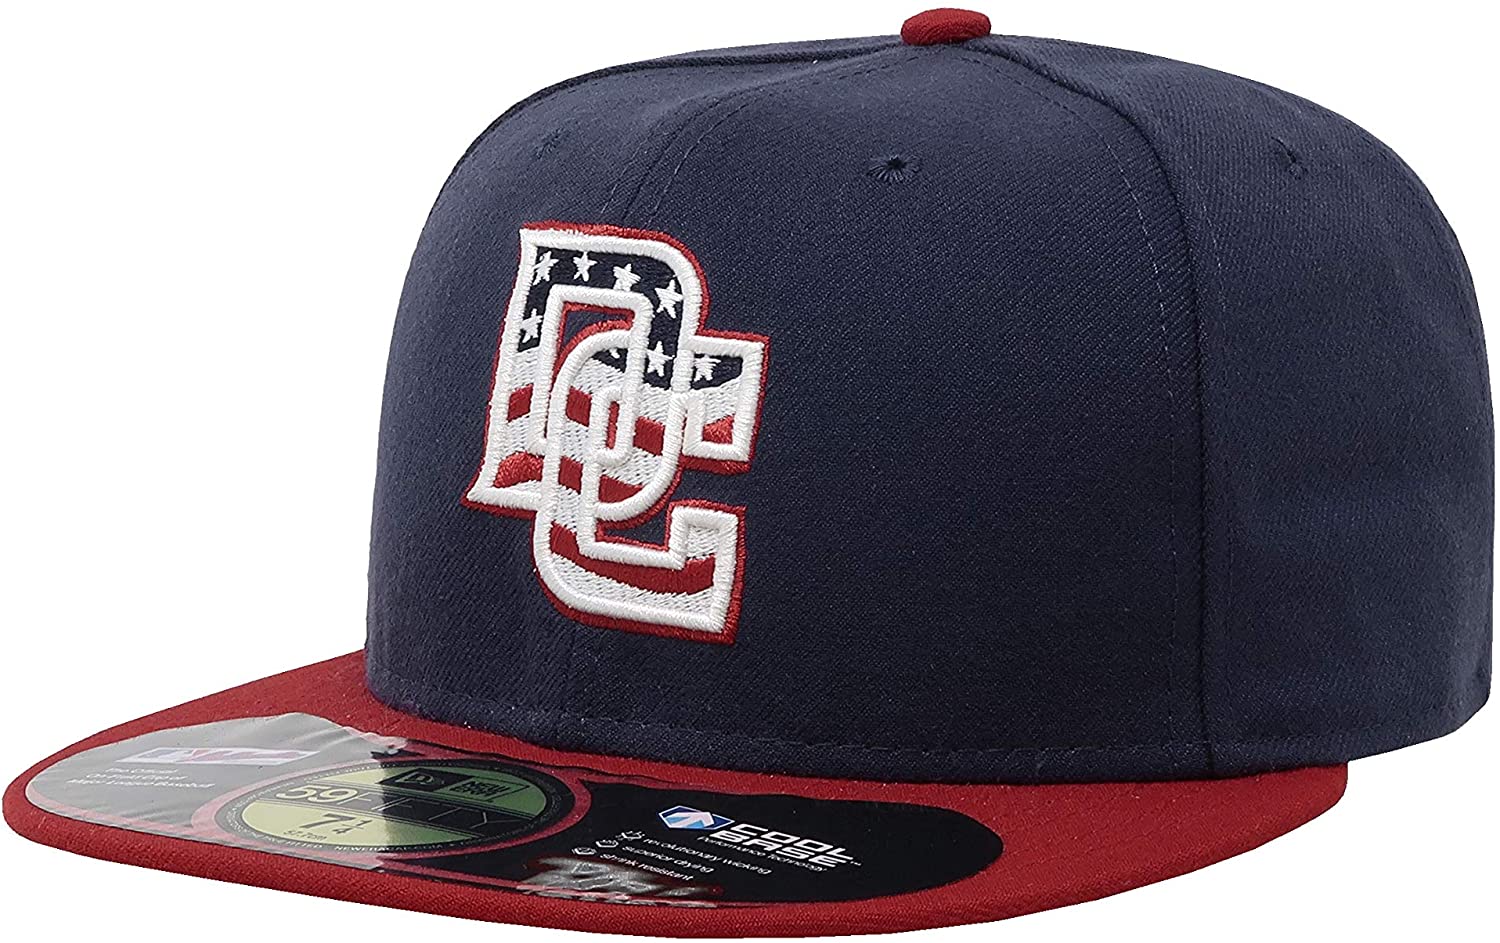 New Era 59Fifty Washington Nationals "dc" Navy/Red cap